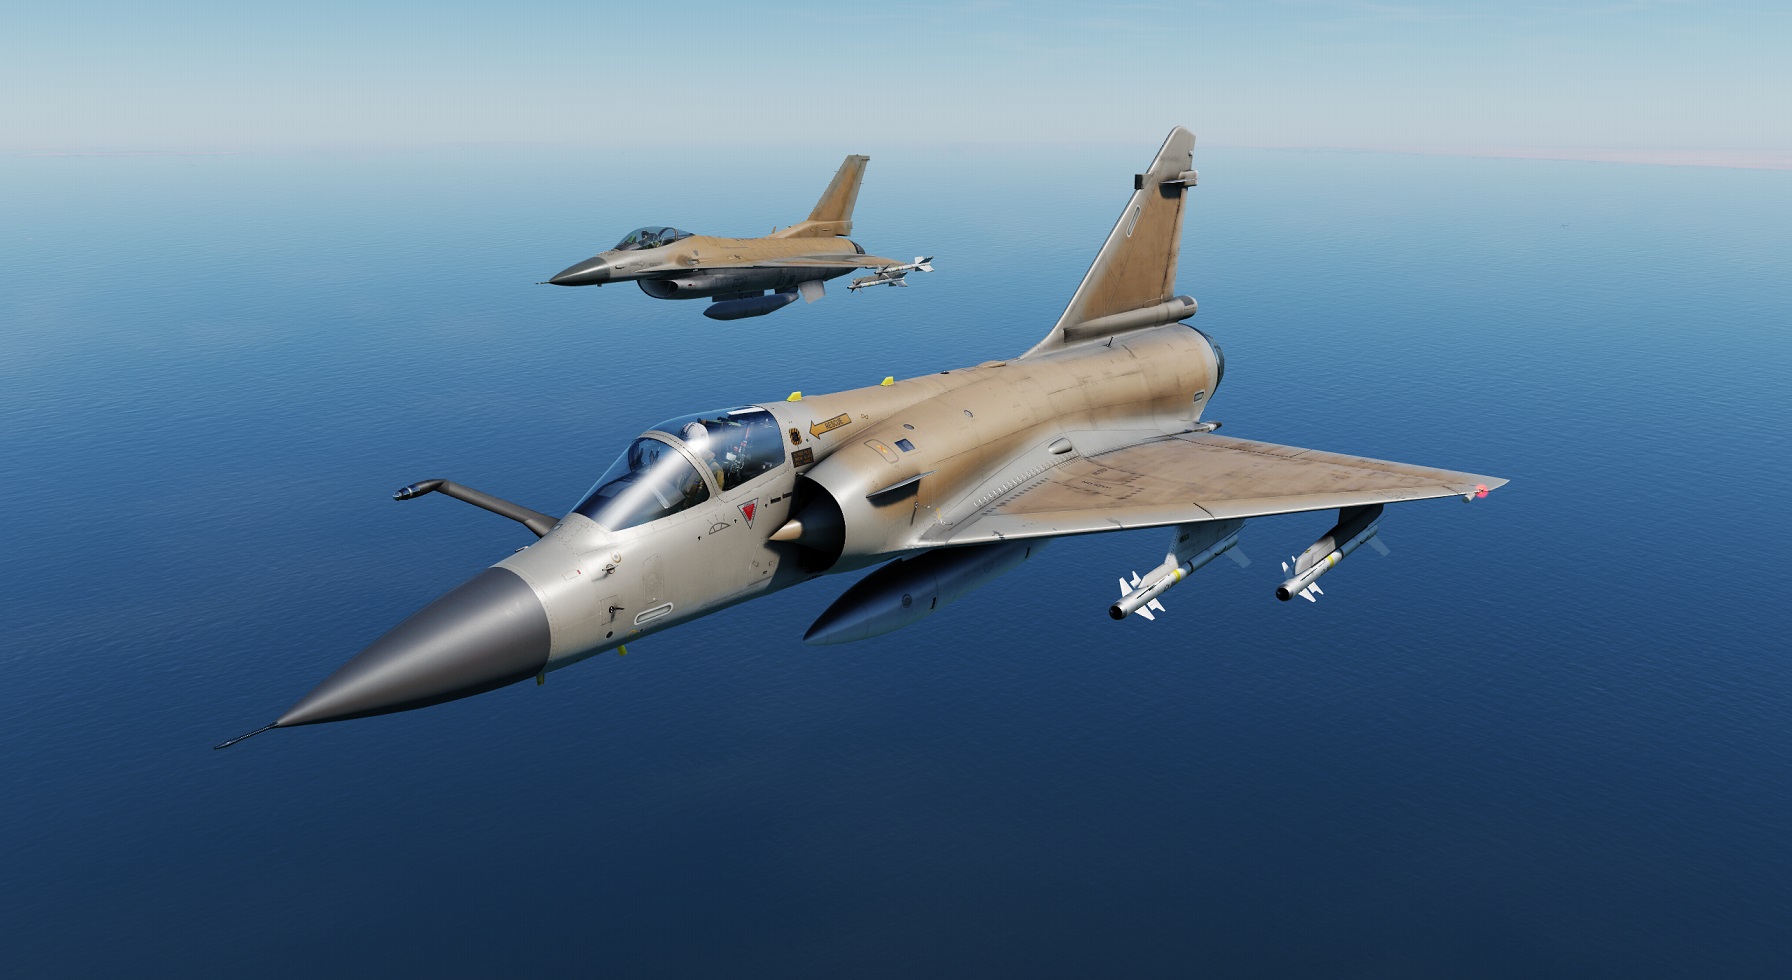  Mercenary Mirage 2k "Renegade" [fictional]